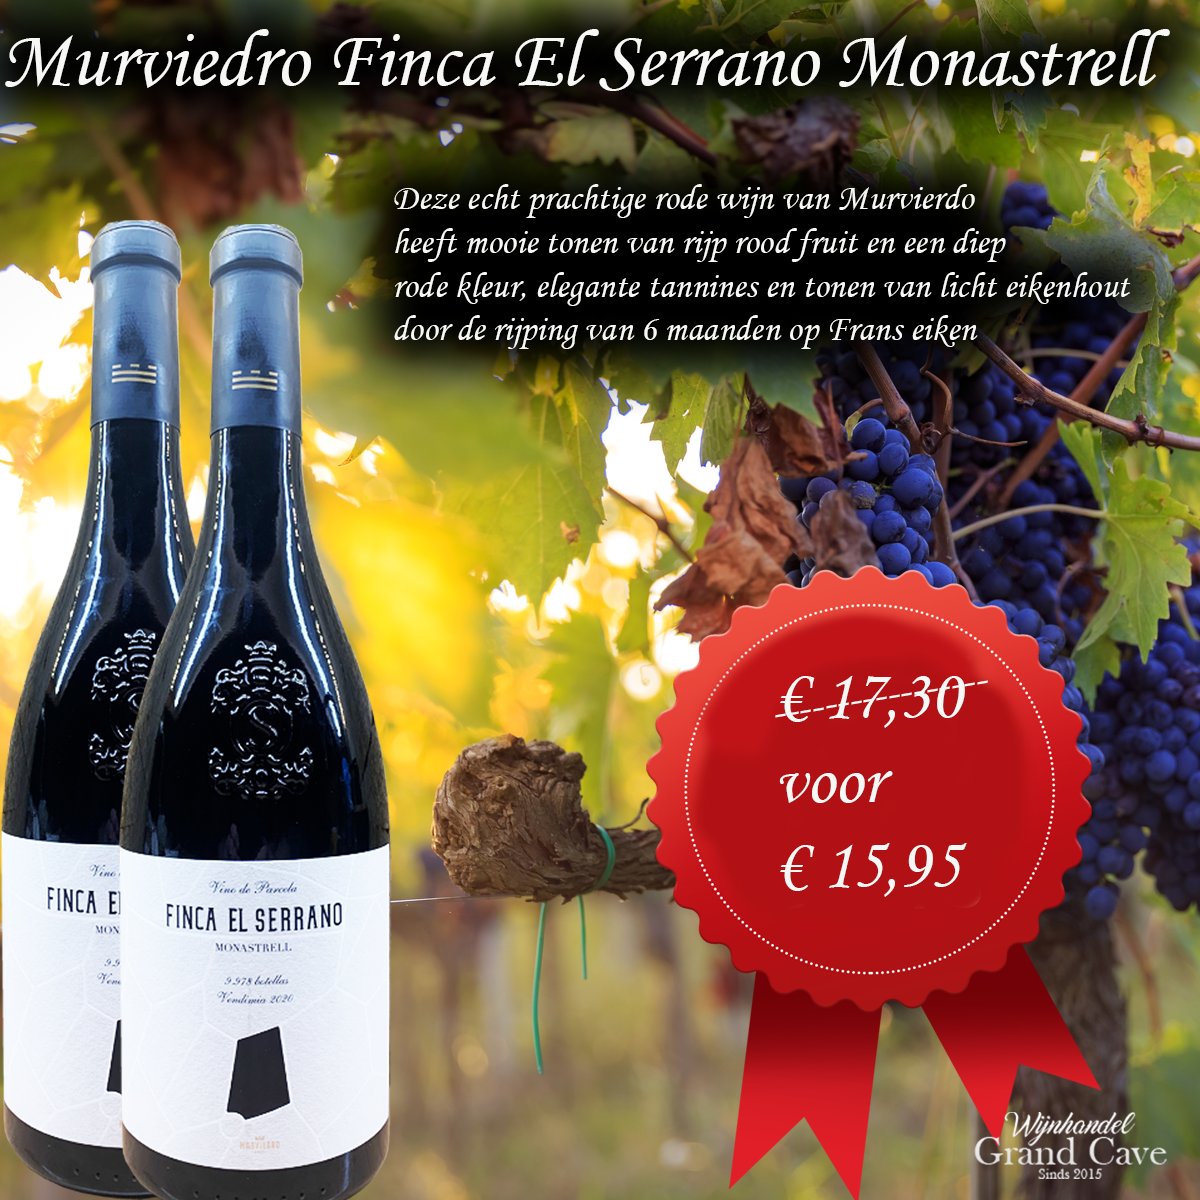 Murviedro Finca El Serrano Monastrell
wijnhandelgrandcave.nl/keuze-menu-wij…
#spain #wine #murviedro #vino #winelover #winetasting #redwine #winetime #valencia #winelovers #alicante #instawine #vin #vinho #whitewine #winestagram #wineoclock #wein #wines #monastrell